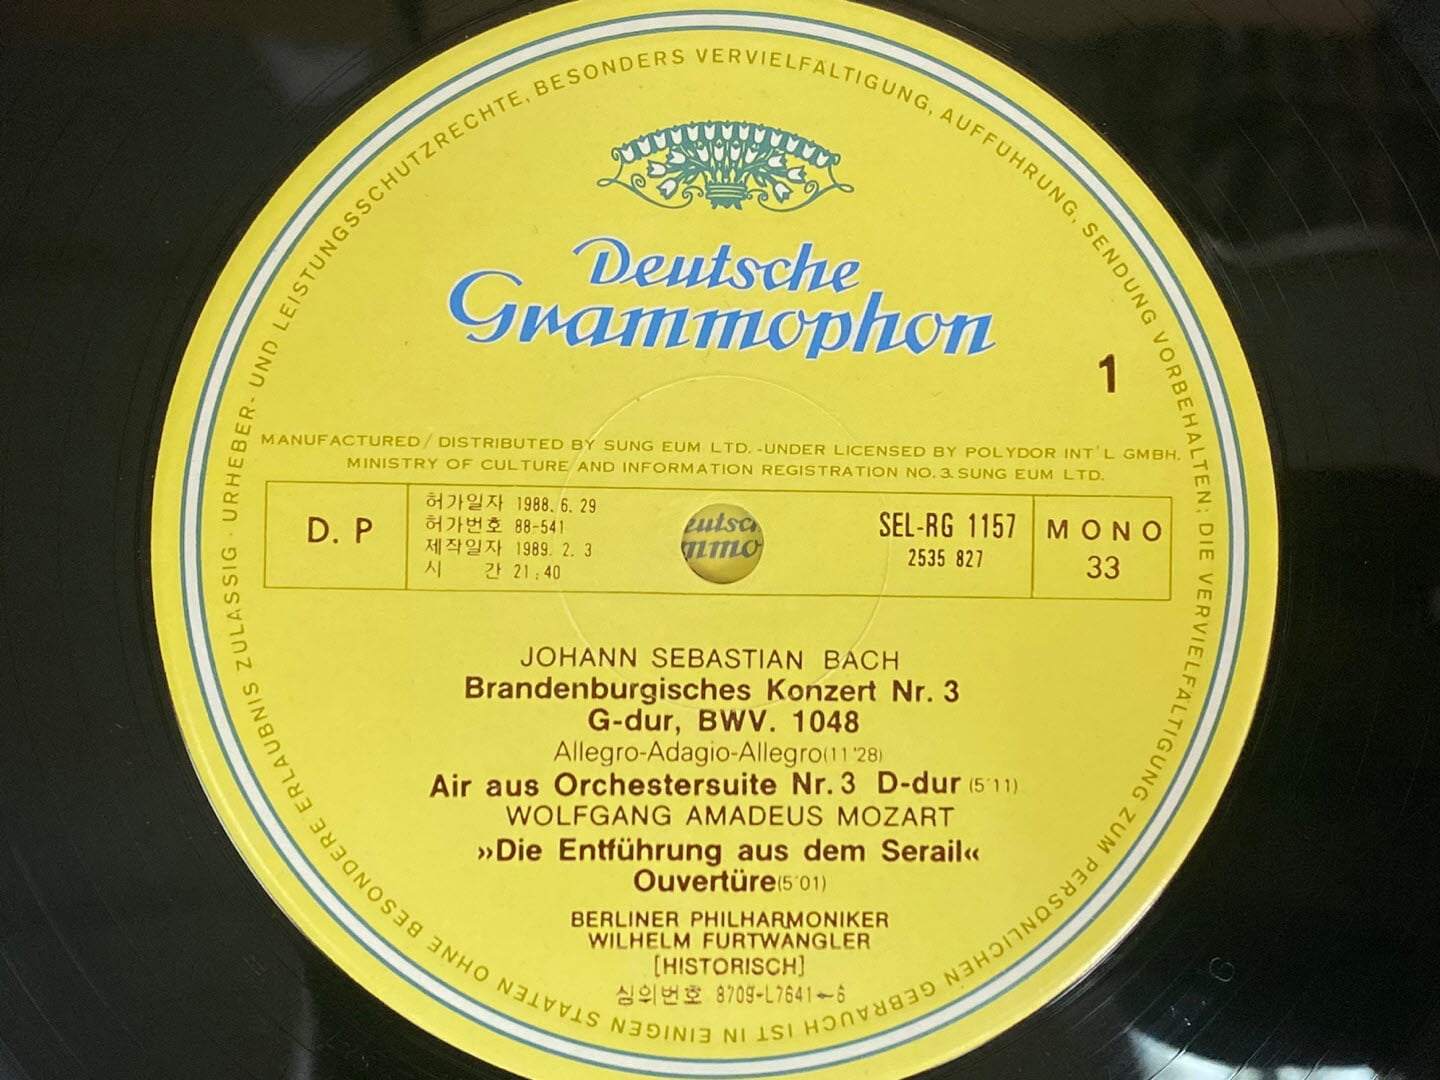 [LP] 빌헬름 푸르트벵글러 - Furtwangler - Bach,Mozart,Beethoven LP [성음-라이센스반]